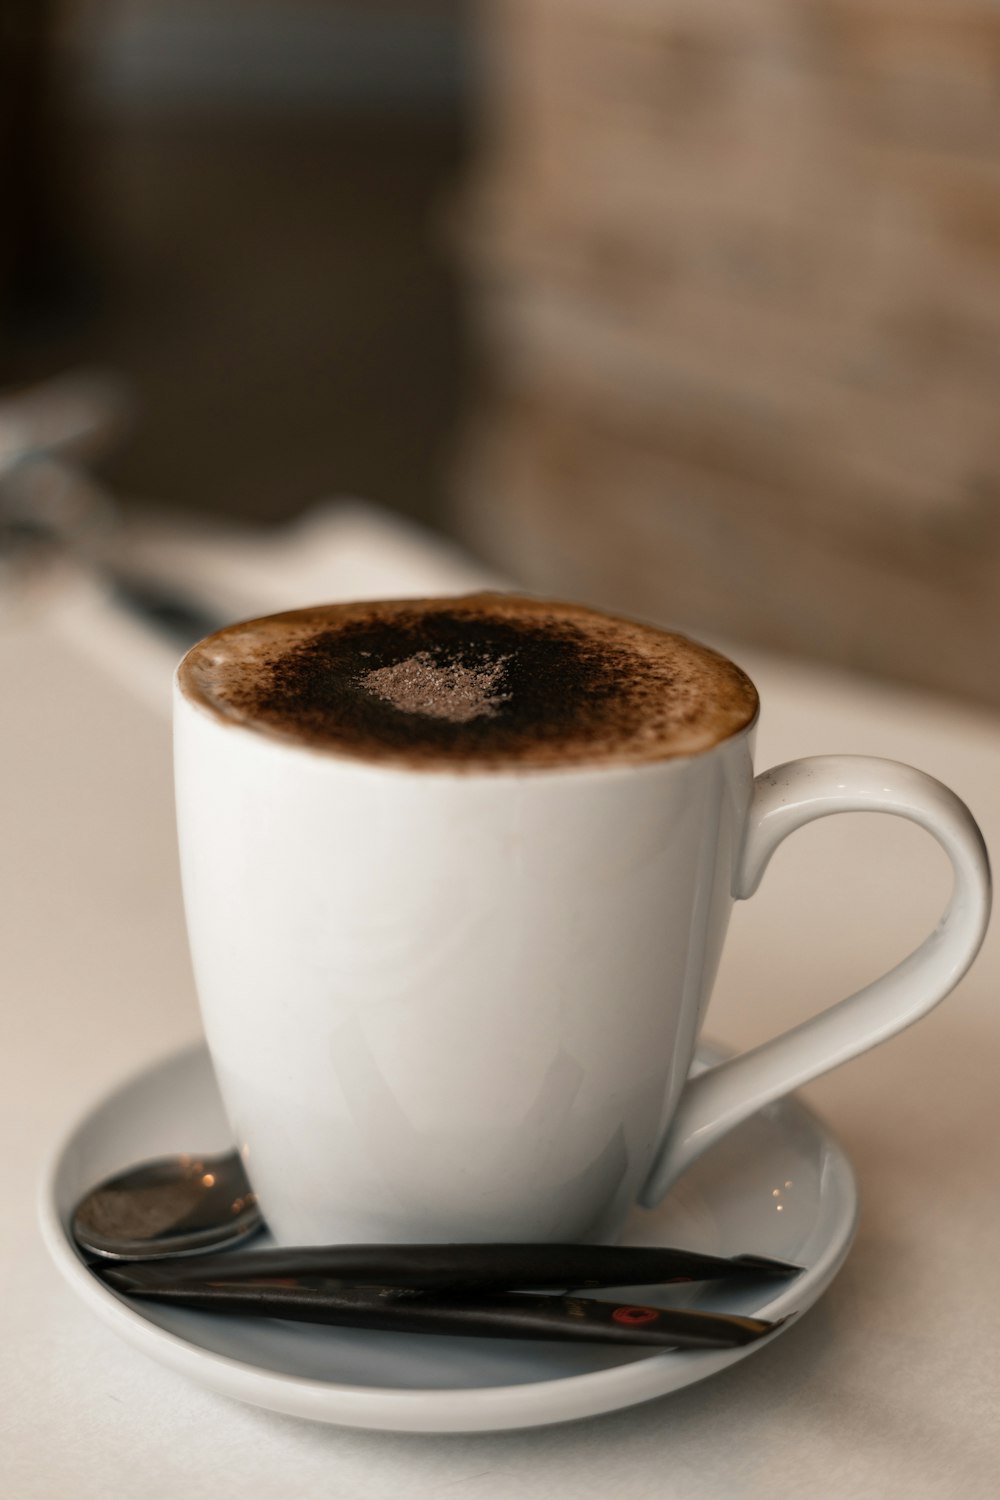 ceramic teacup with black latte